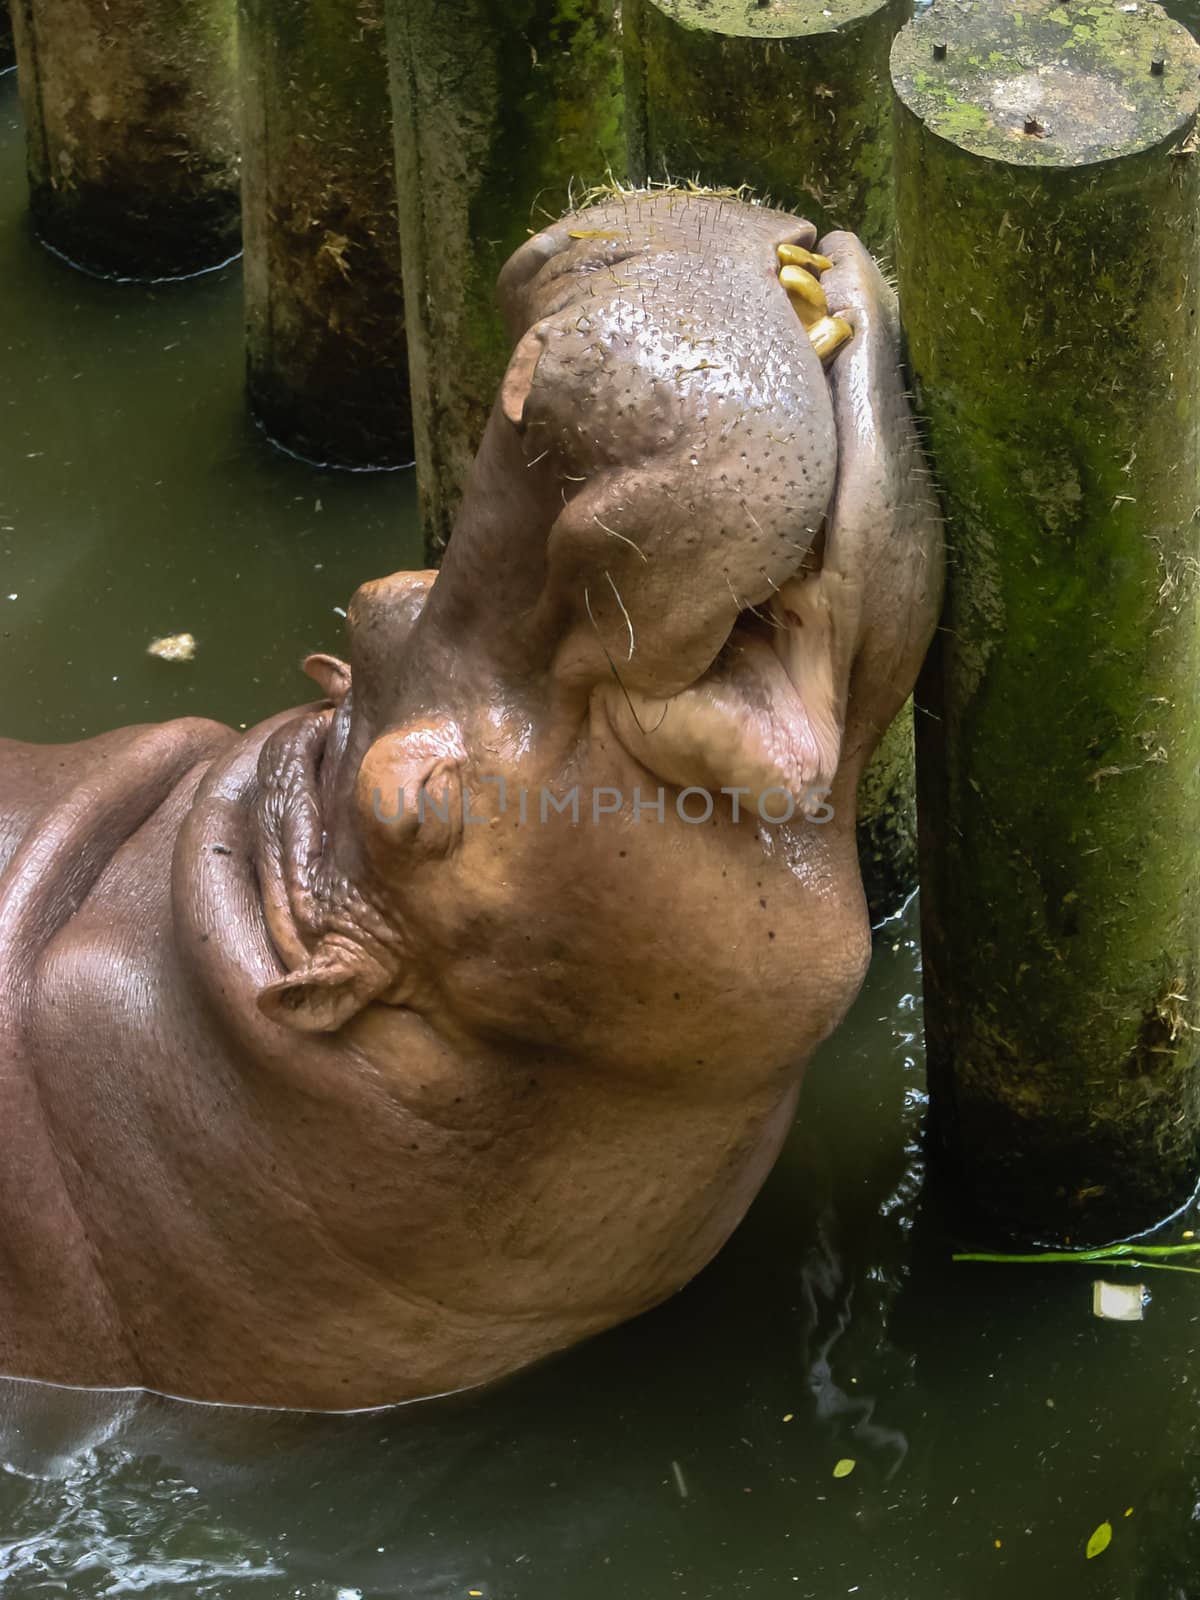 Sleepy Hippopotamus showing teeth in funny shot, closeup